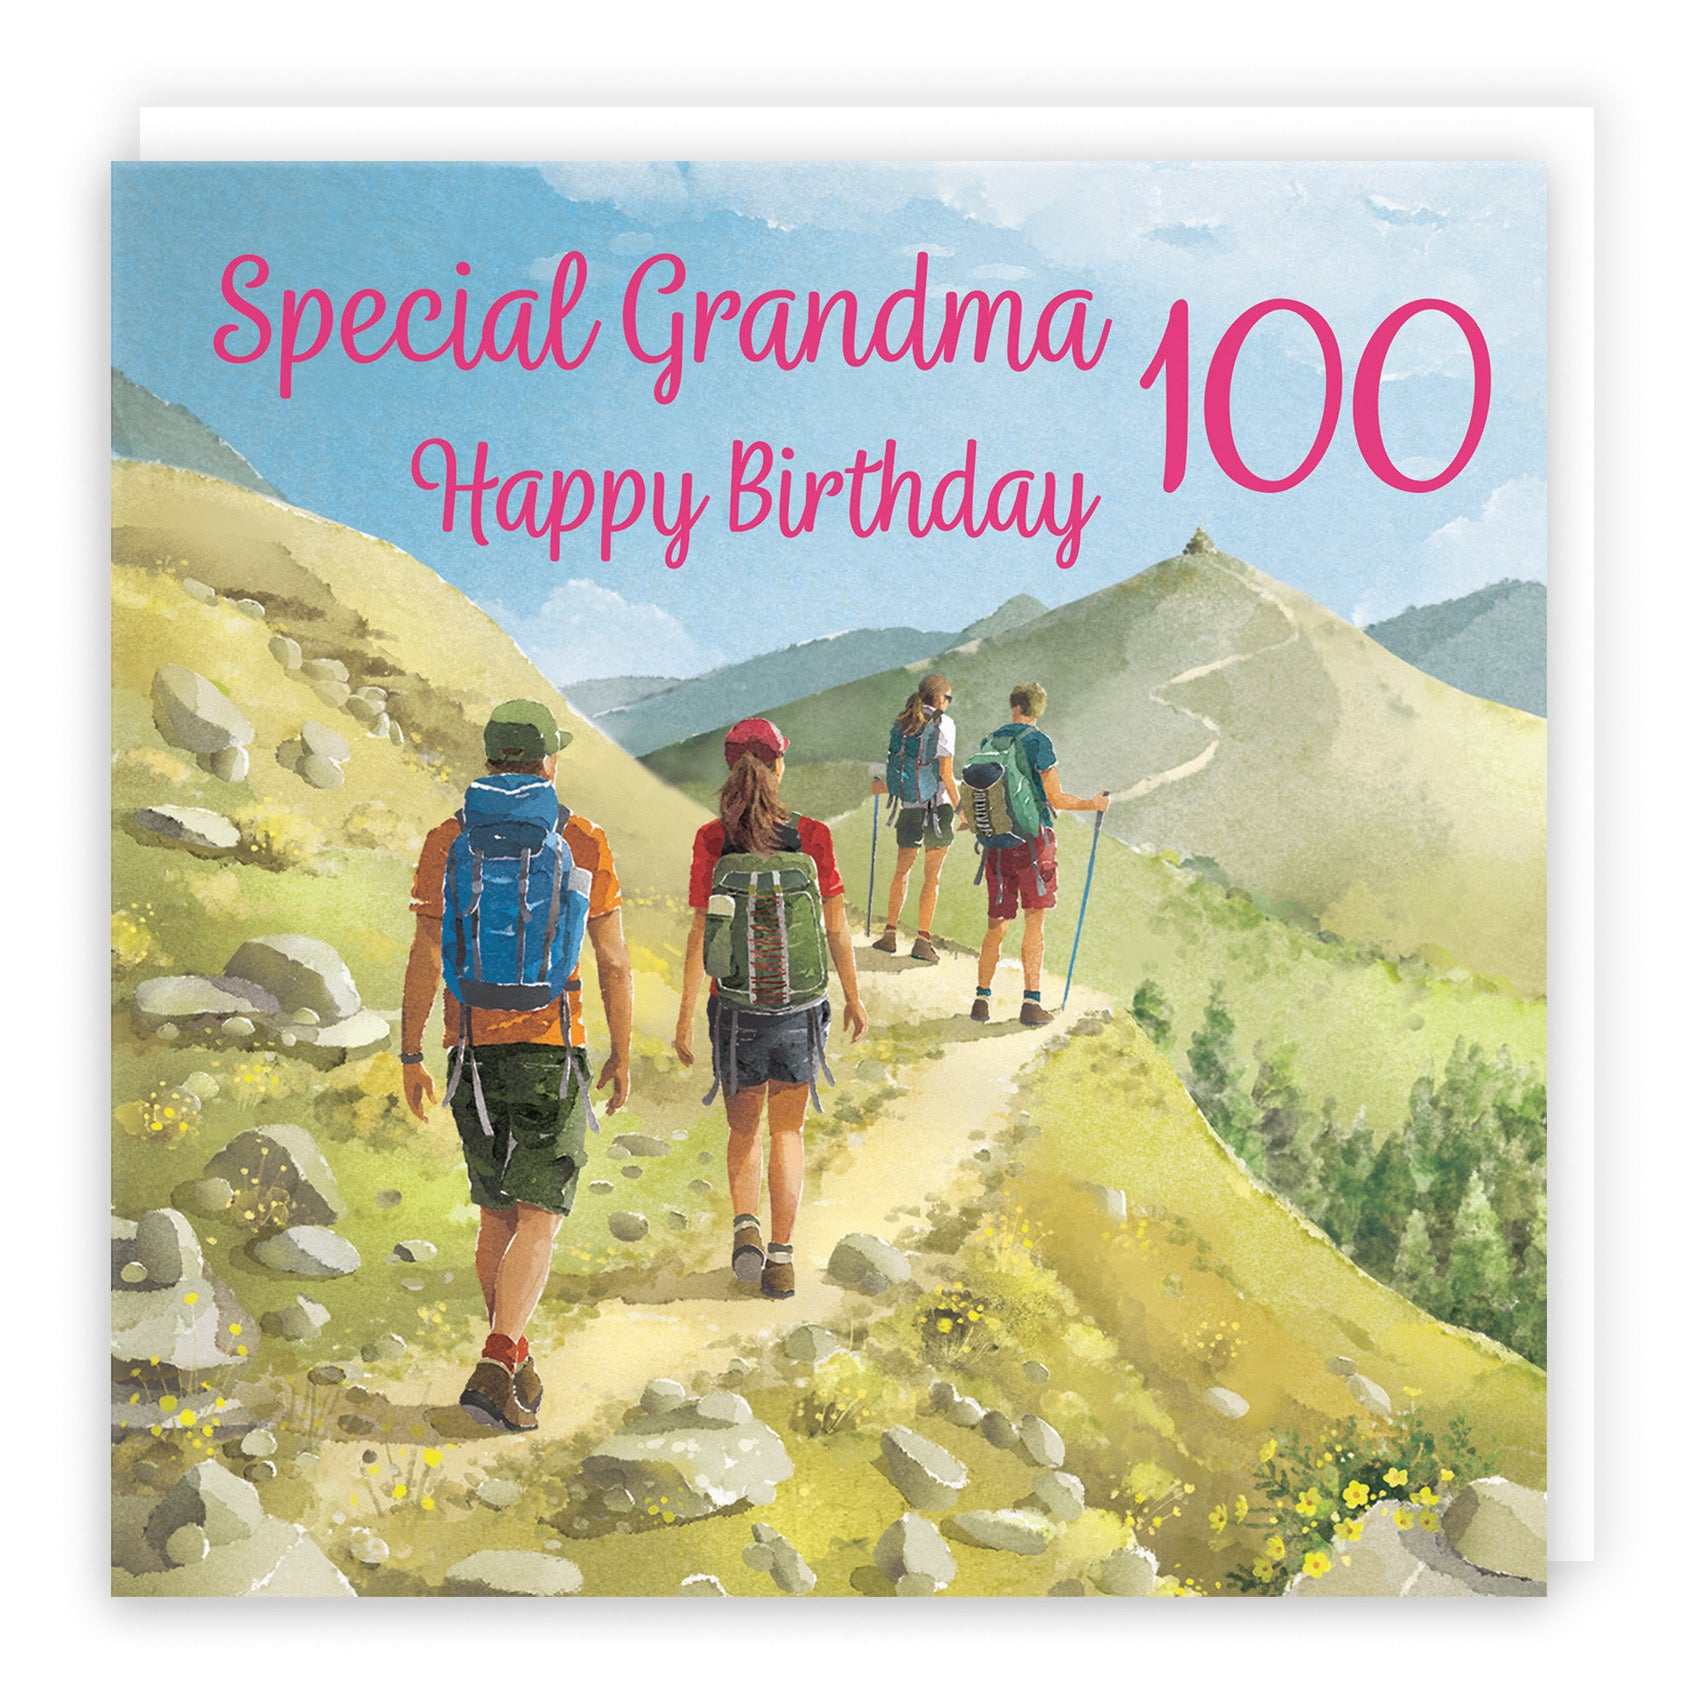 100th Grandma Walking Birthday Card Milo's Gallery - Default Title (B0CR1TWZQQ)